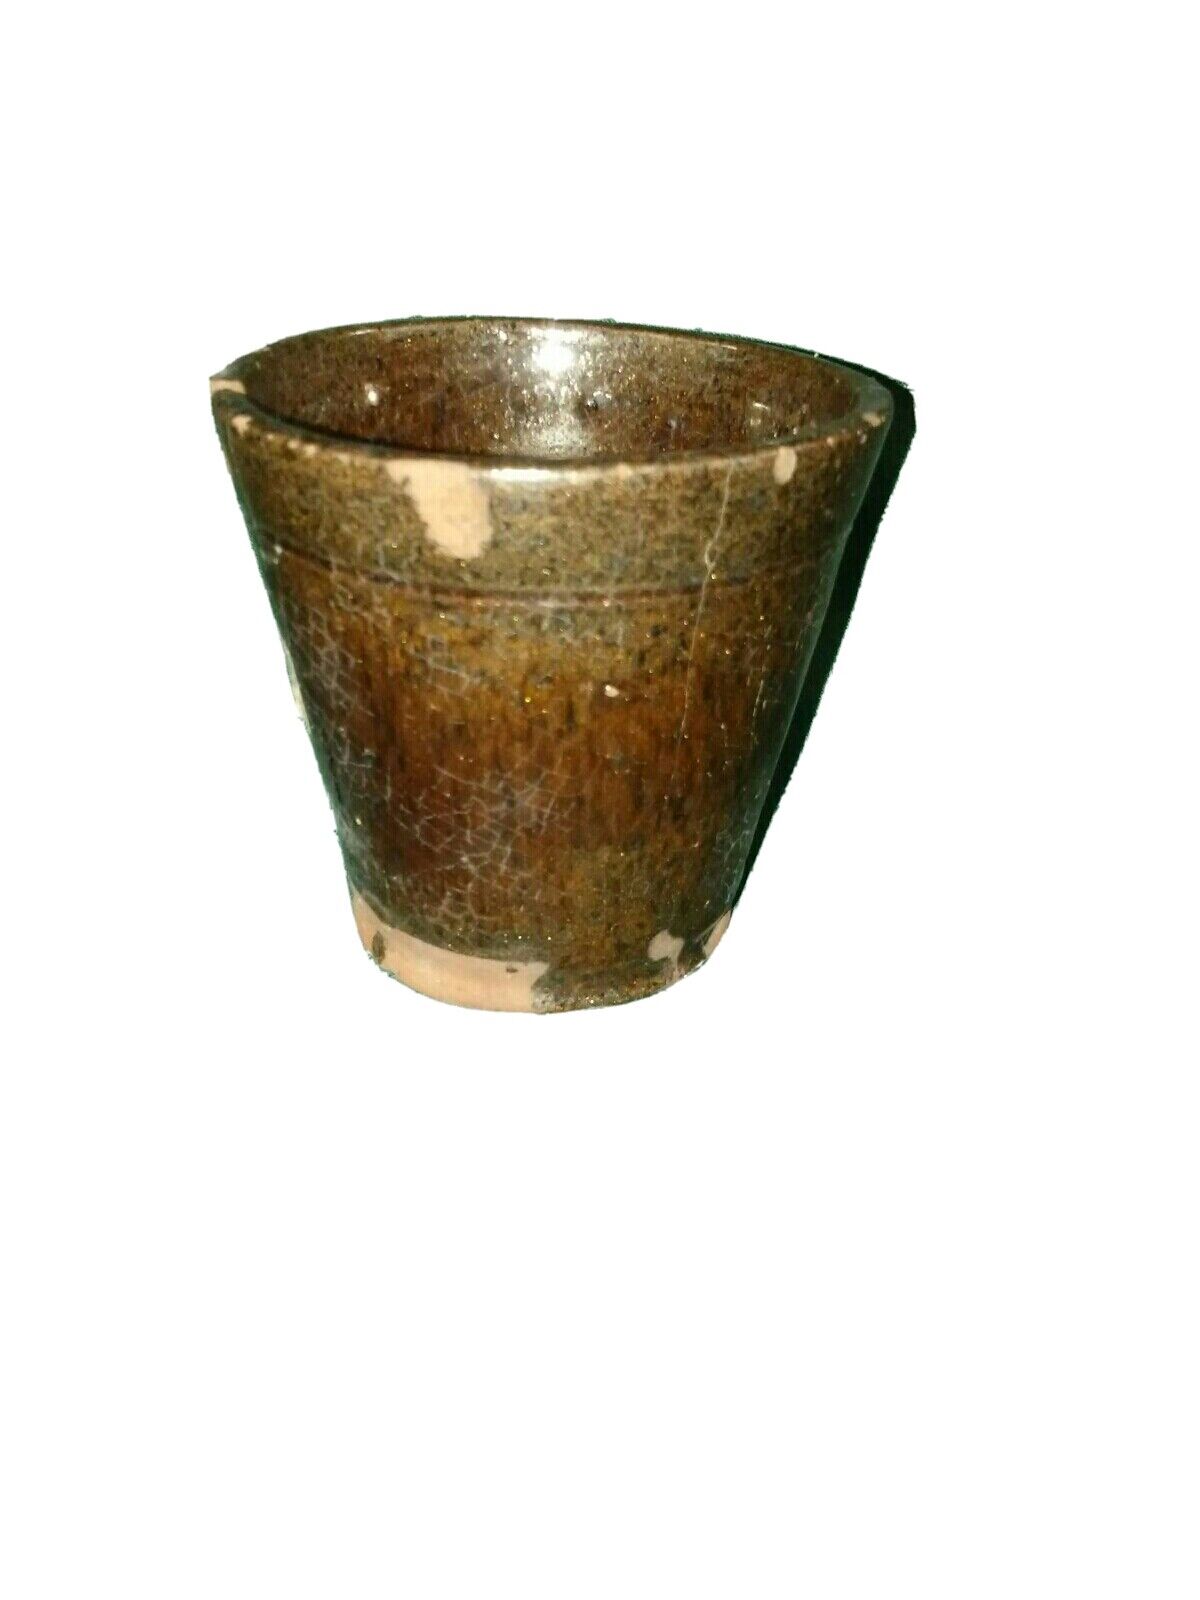 Antique Primitive Redware Ale Drinking Cup Iridescent Glaze